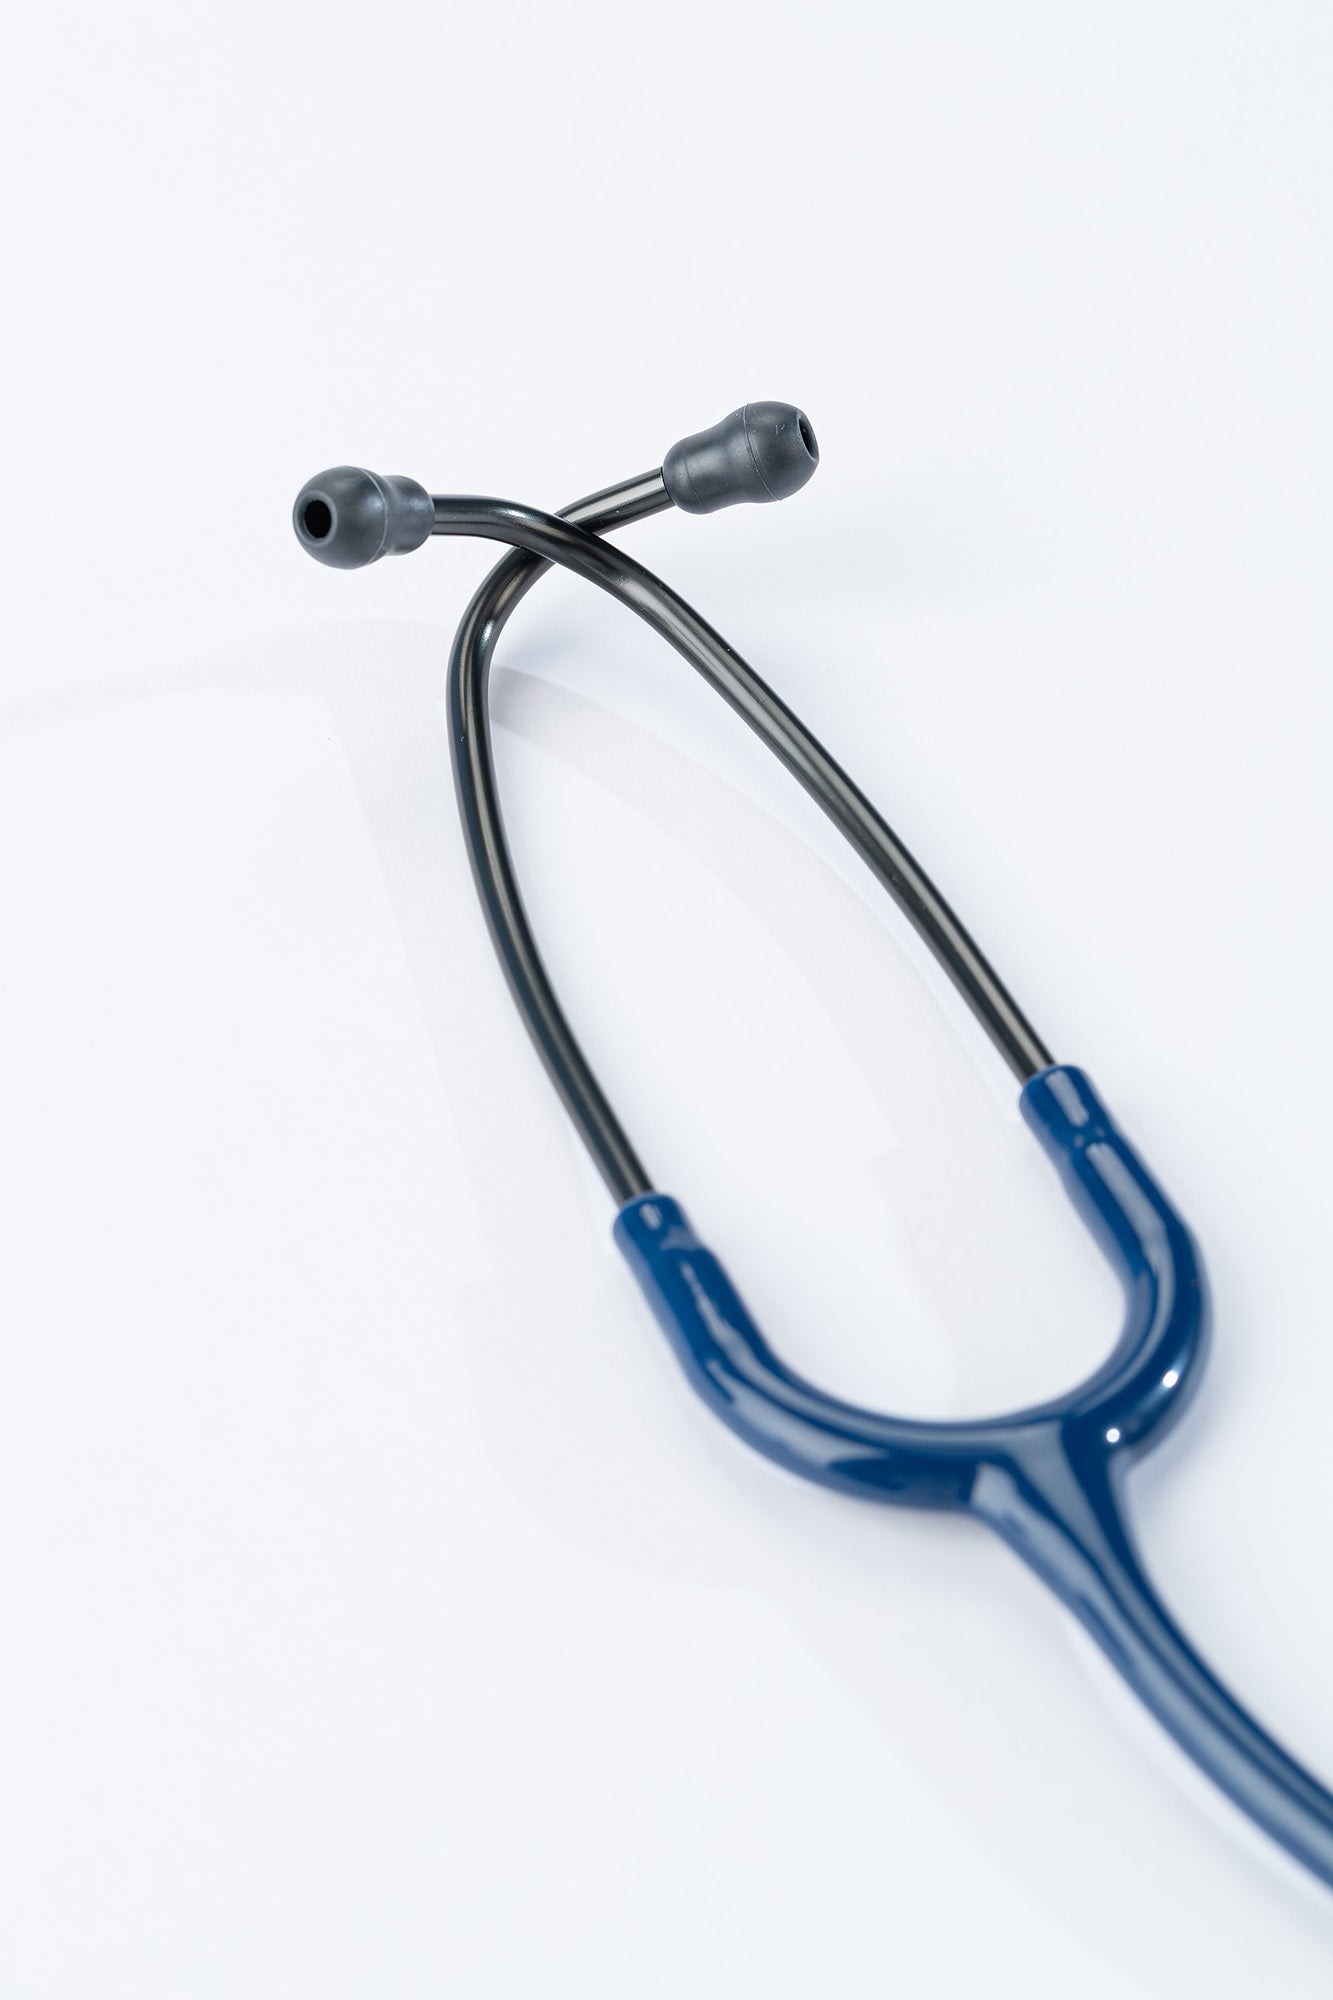 3M™ Littmann® Classic III™ Monitoring Stethoscope, Mirror - Finish Chestpiece, Navy Blue Tube, Smoke Stem and Headset, 27 inch, 5863